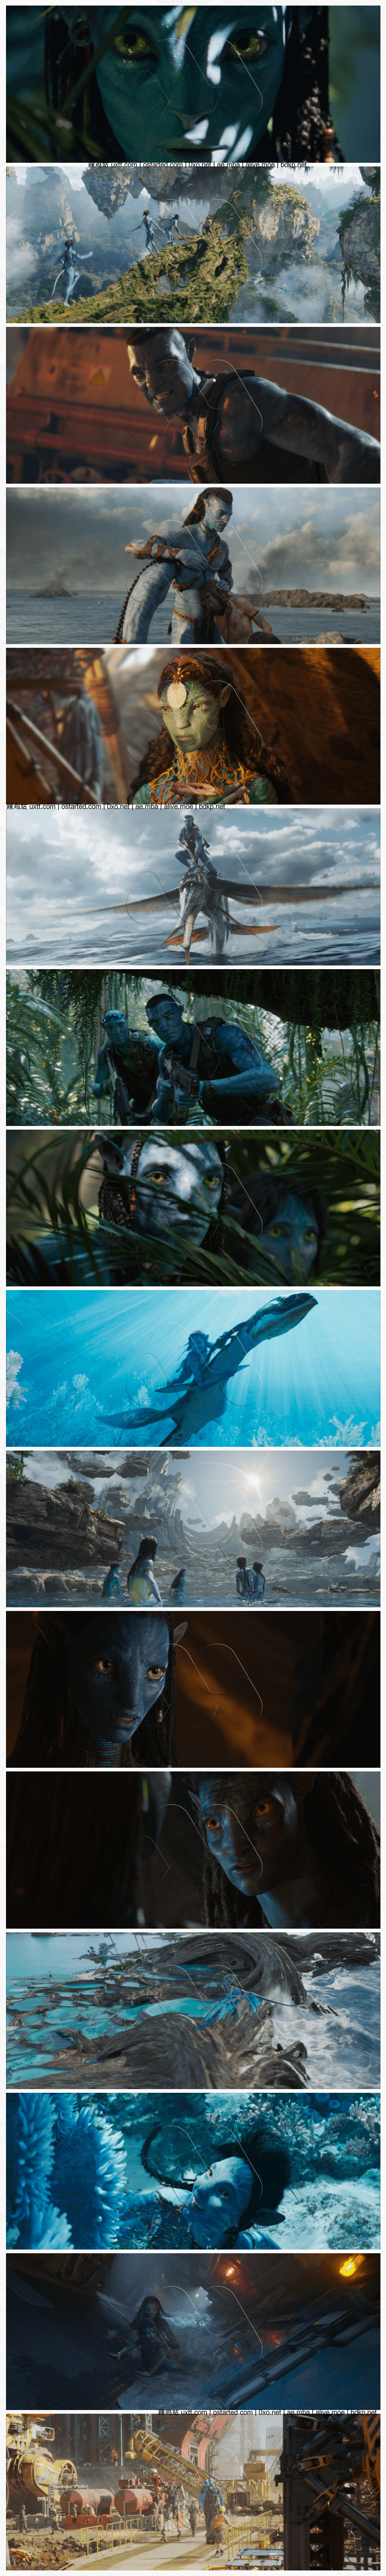 阿凡达2：水之道 Avatar: The Way of Water (2022) - 第3张图片